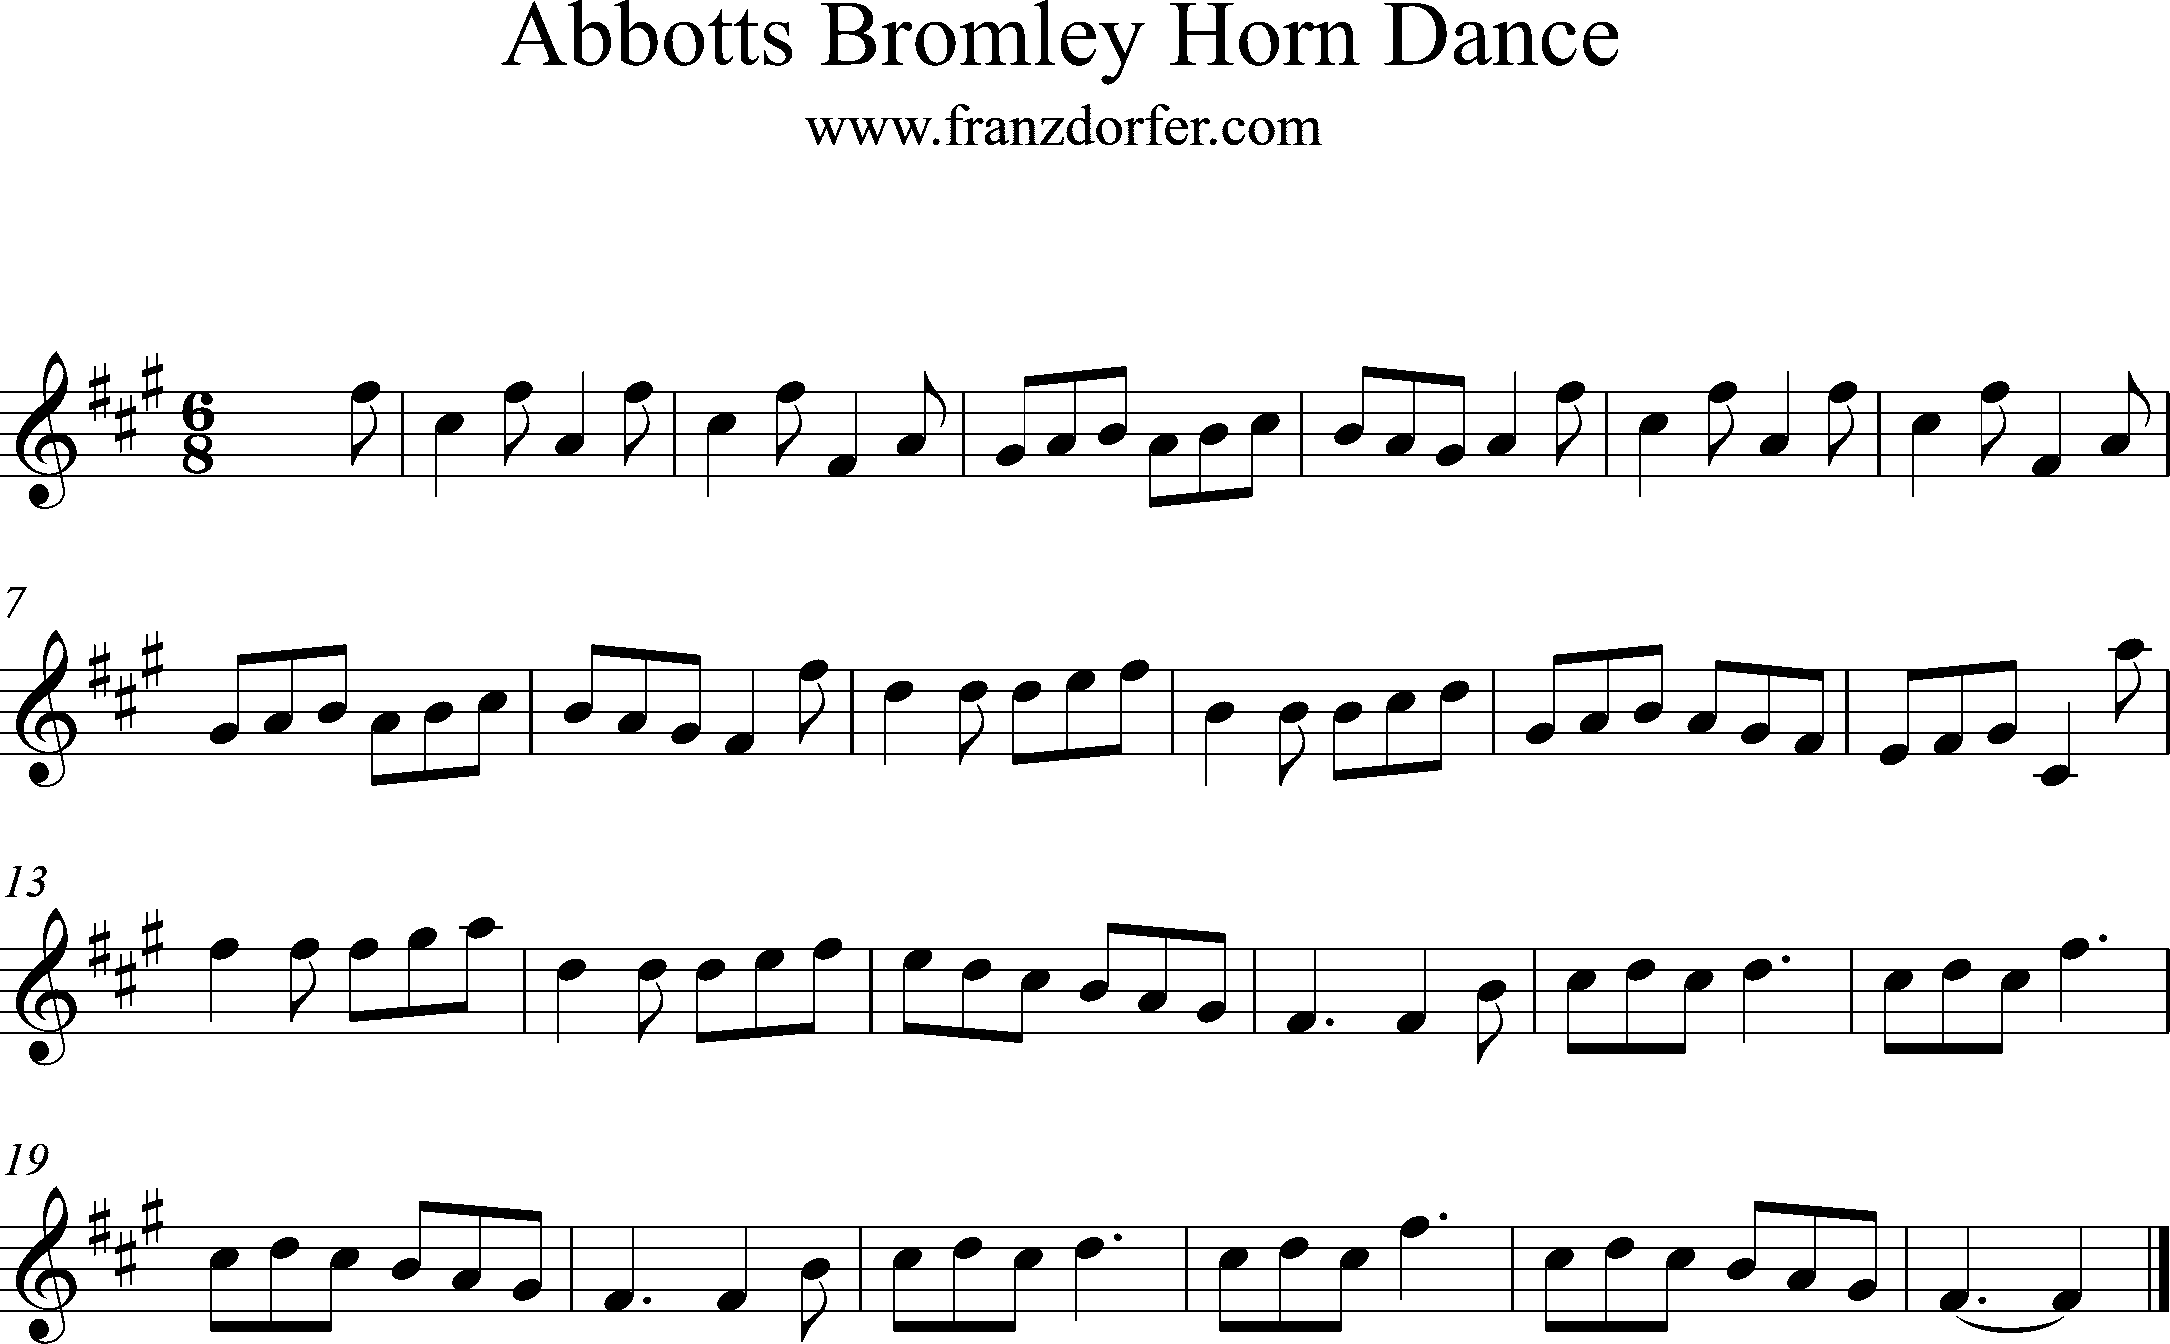 sheetmusic, Clarinet- Abbotts Bromley Horn Dance